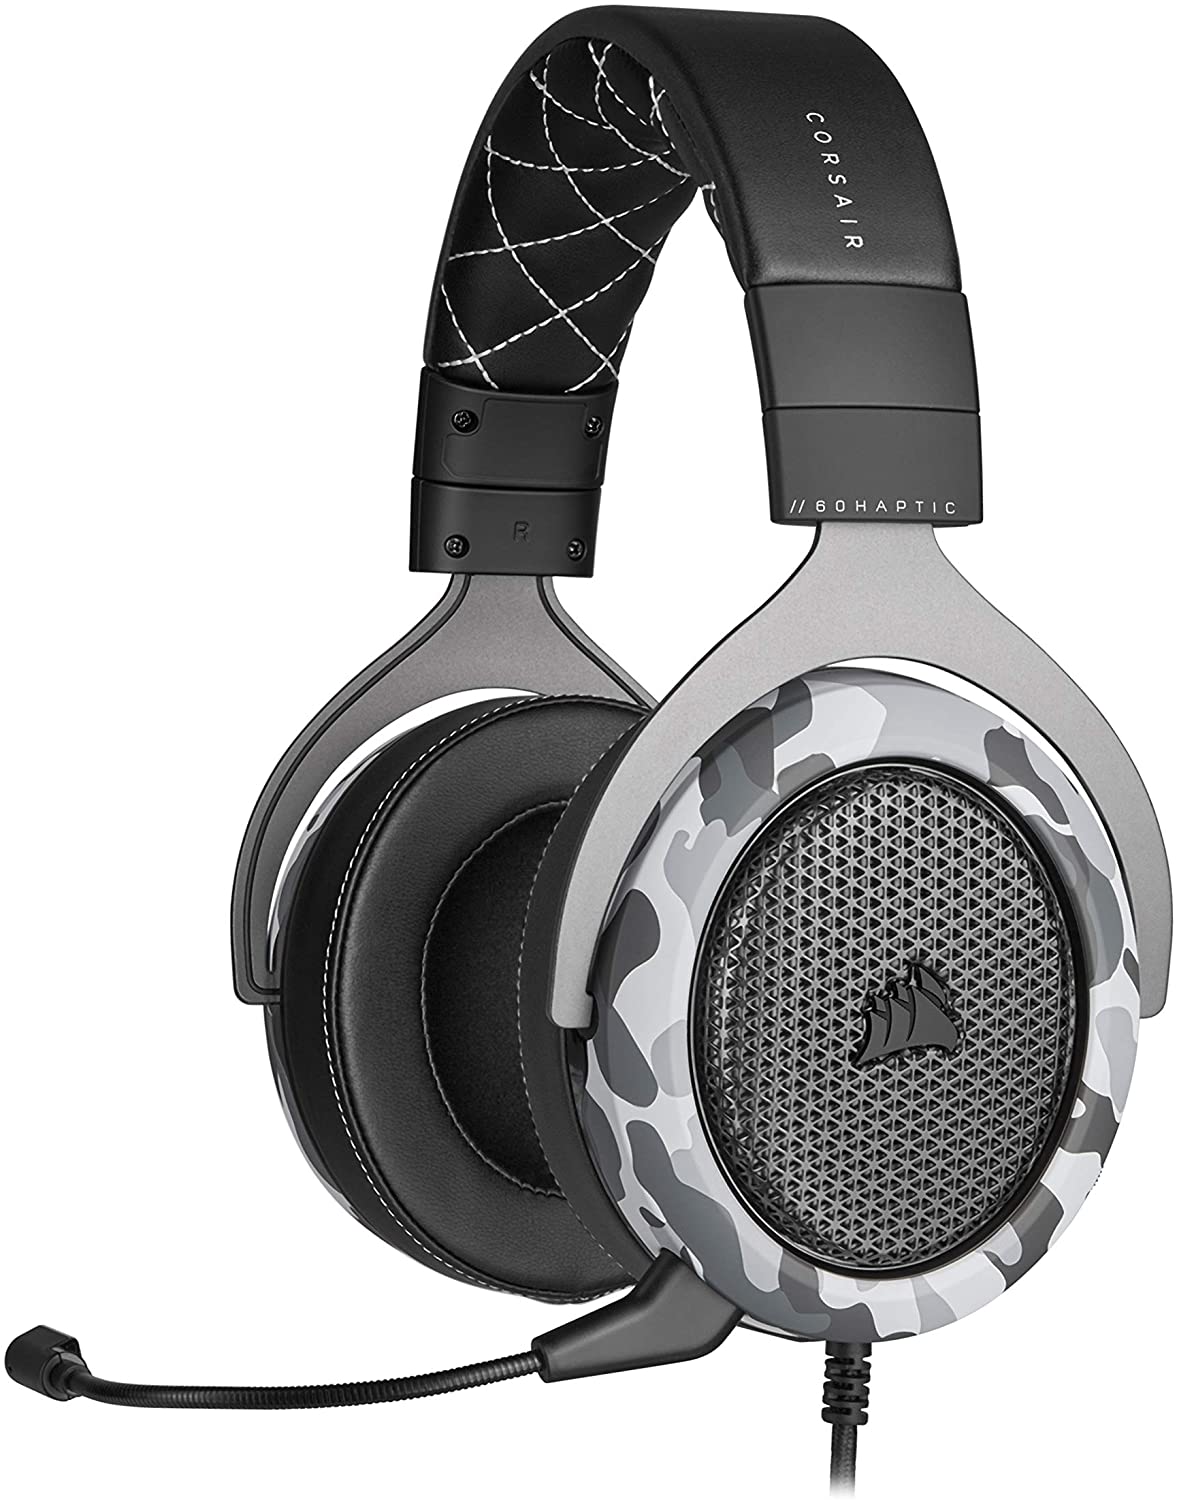 Corsair HS60 Haptic Stereo Gaming Headset w/ Haptic Bass (Black/White Camo) $79.99 + Free Shipping